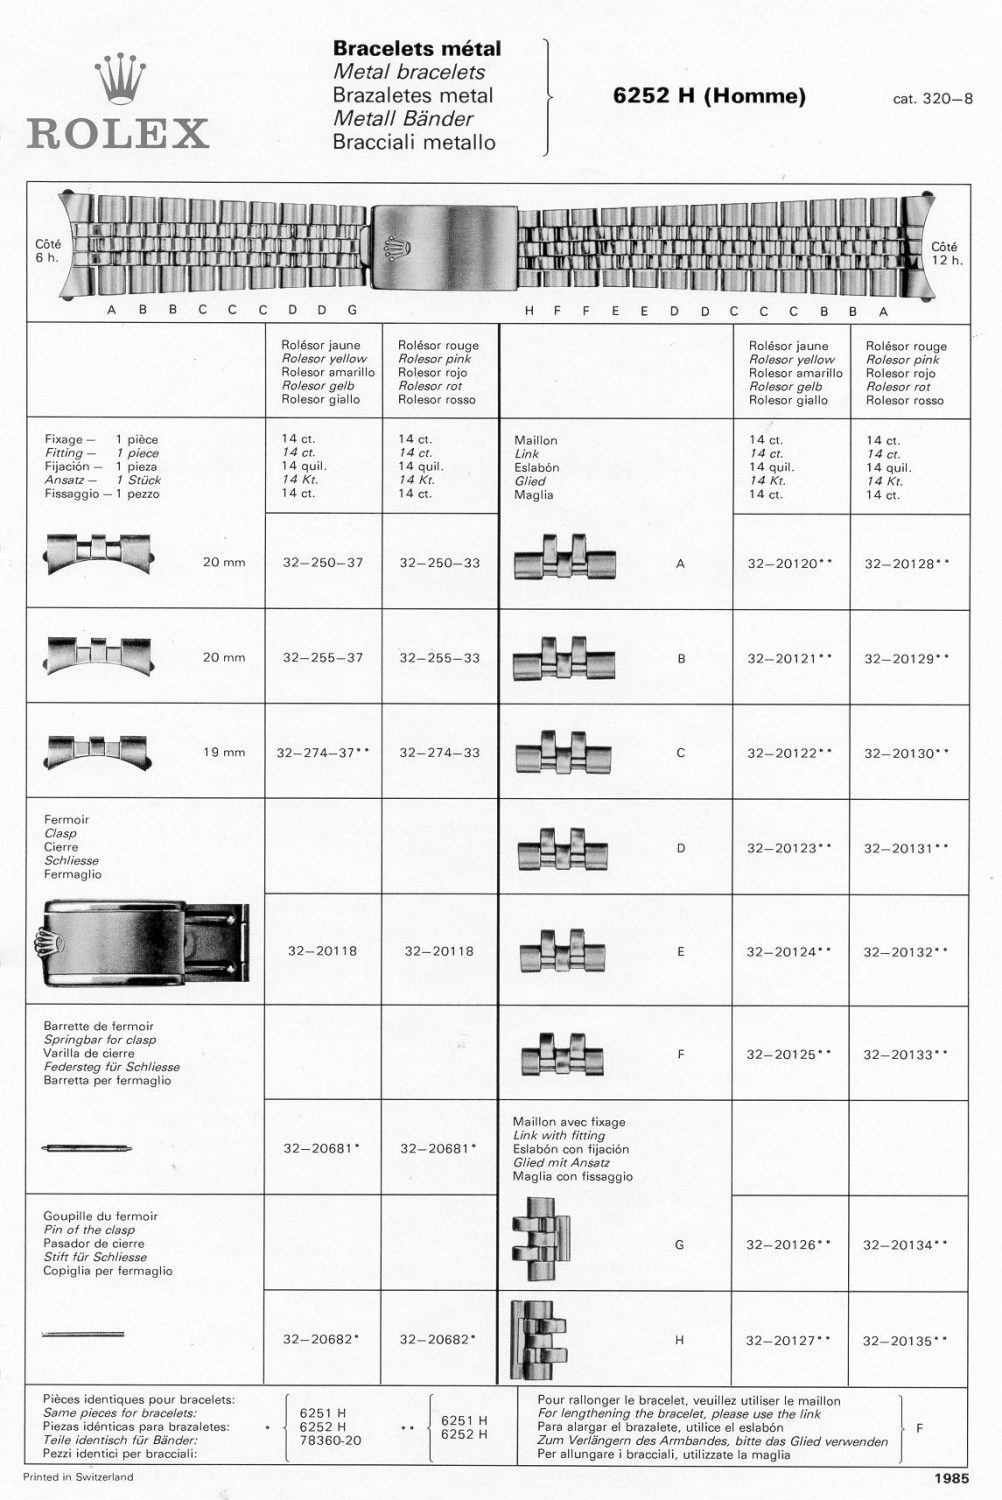 Rolex Bracelet sheet information Resource